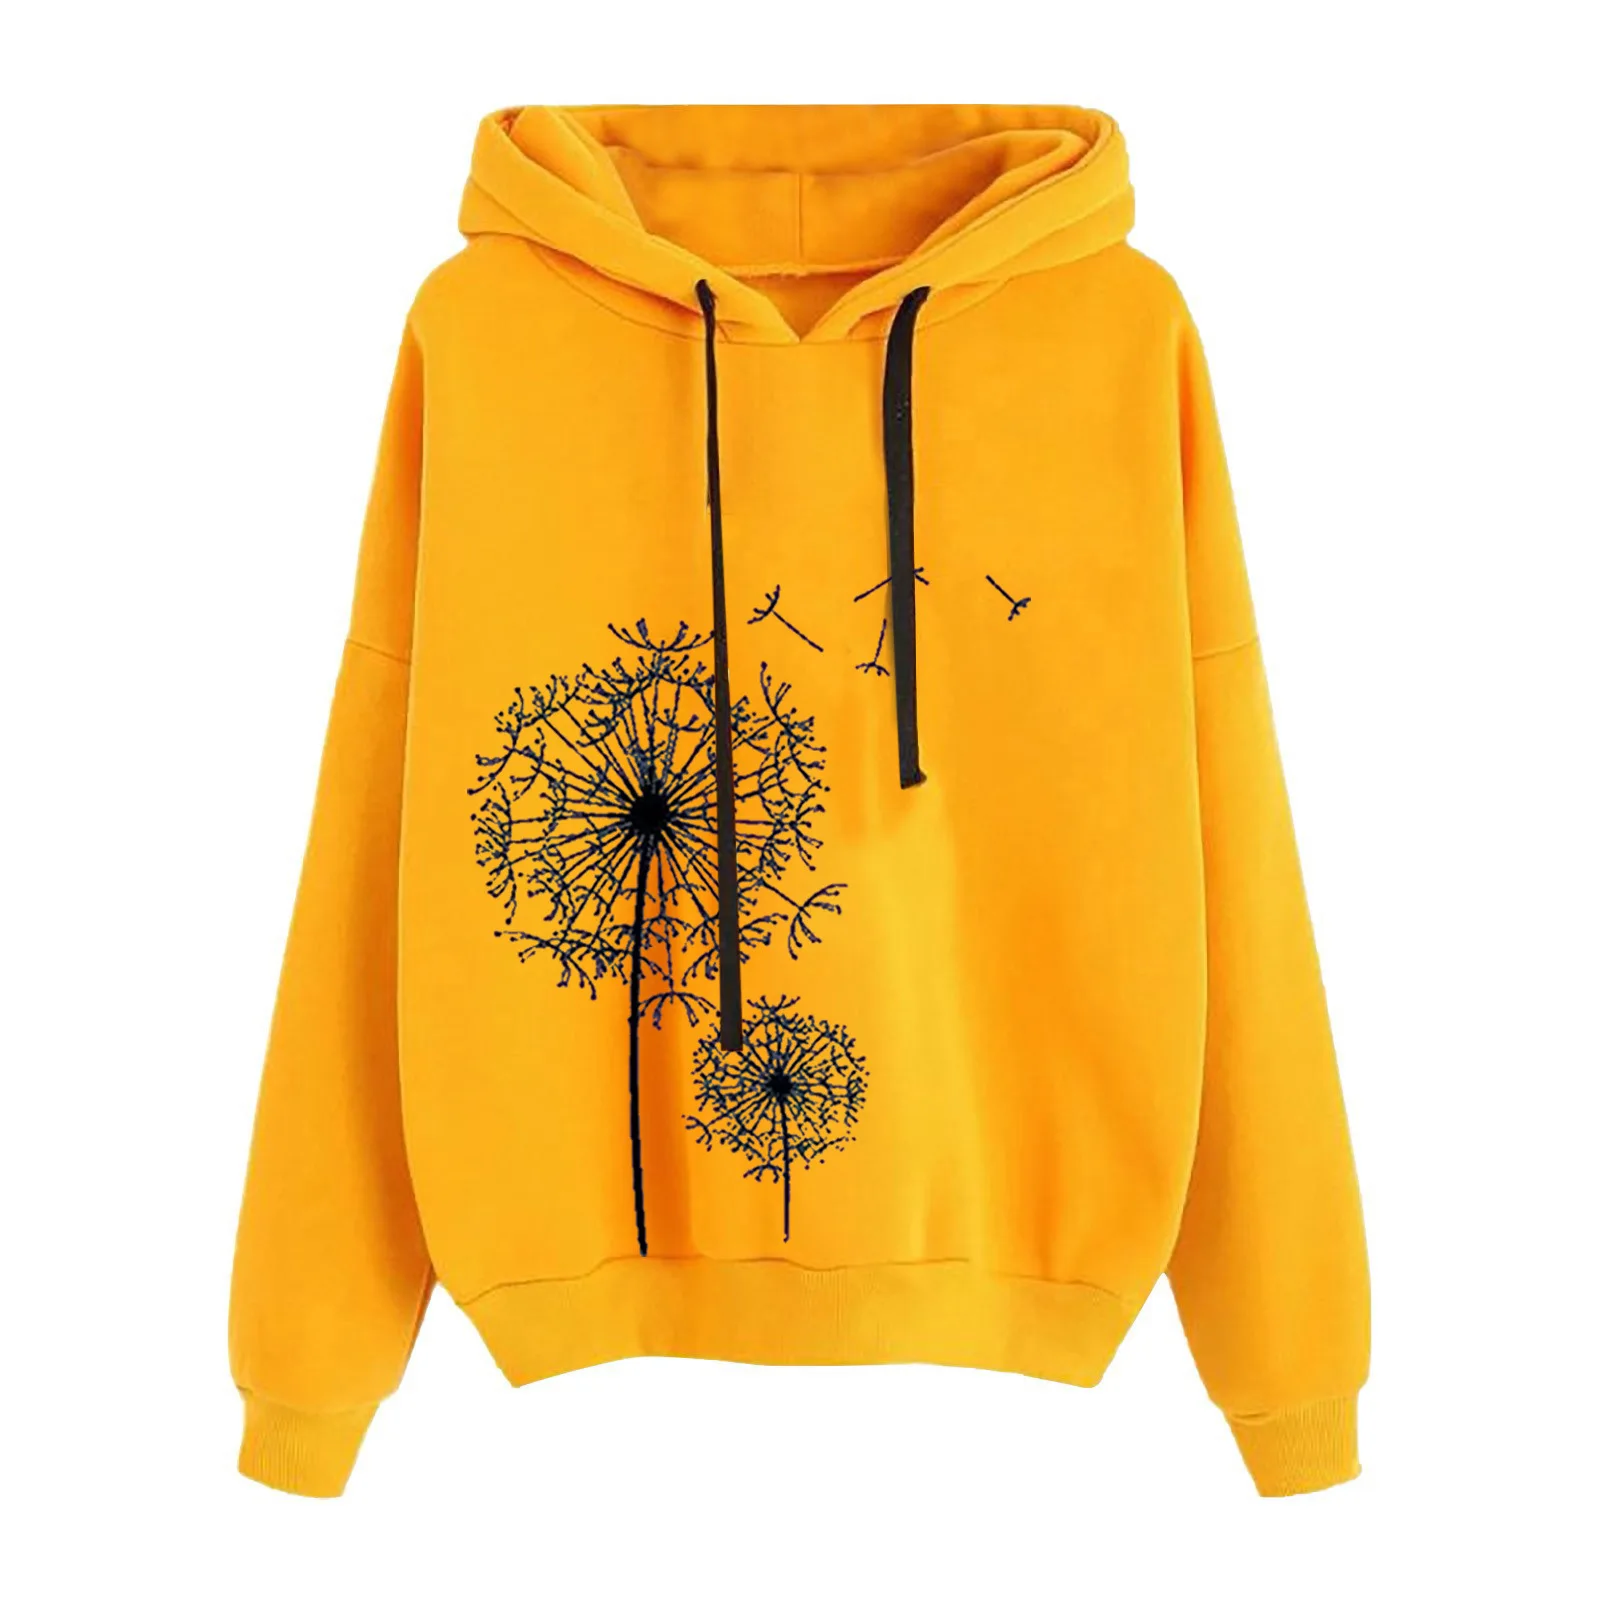 Dandelion Printed yellow Sweatshirt Hoodies 1